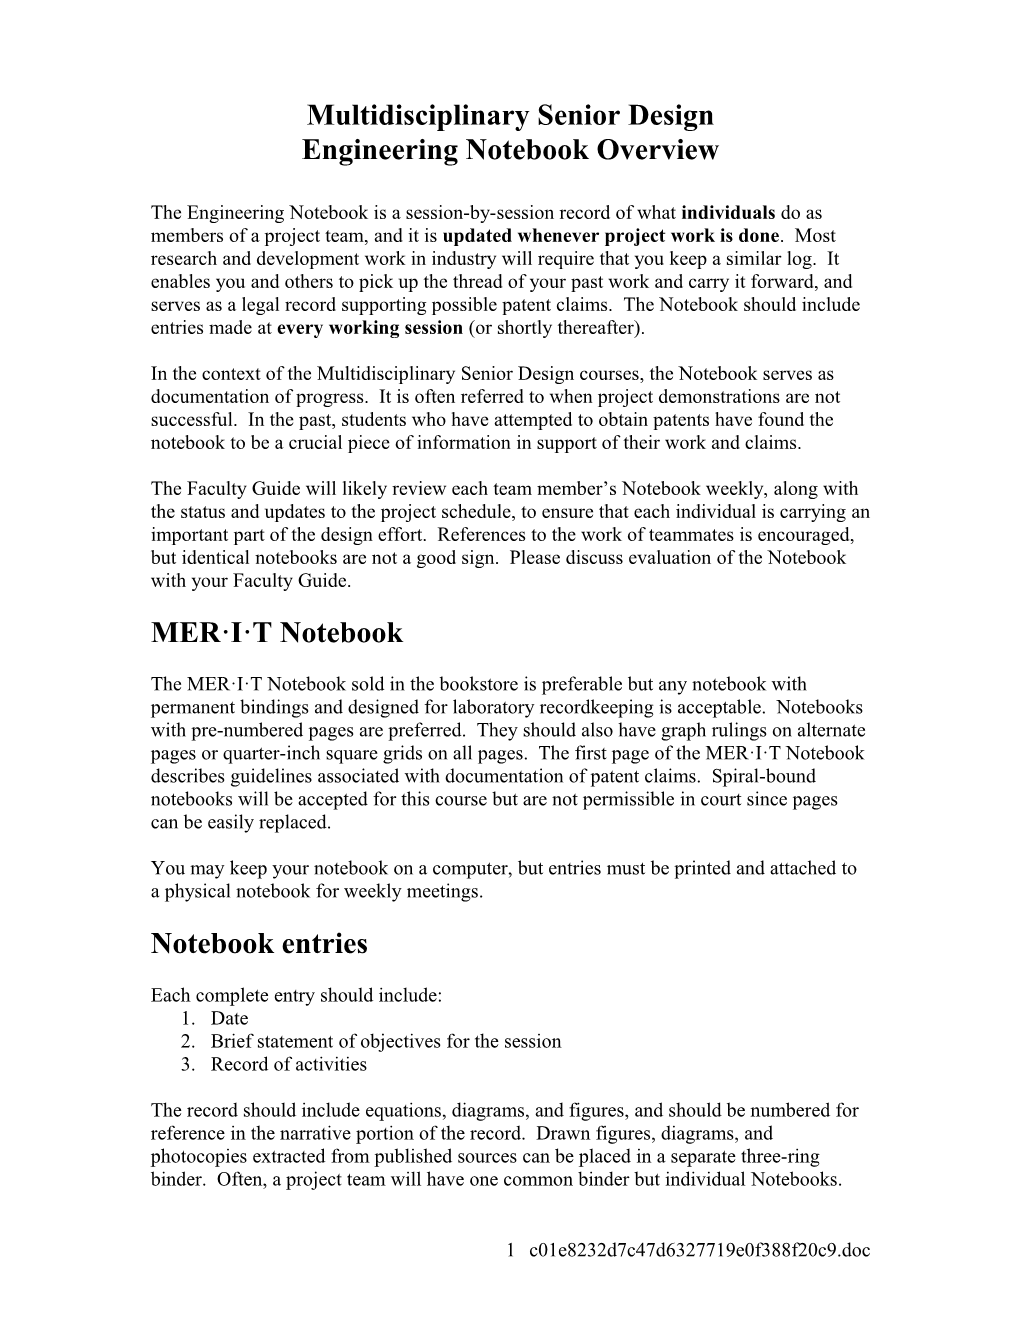 Engineering Notebook Overview